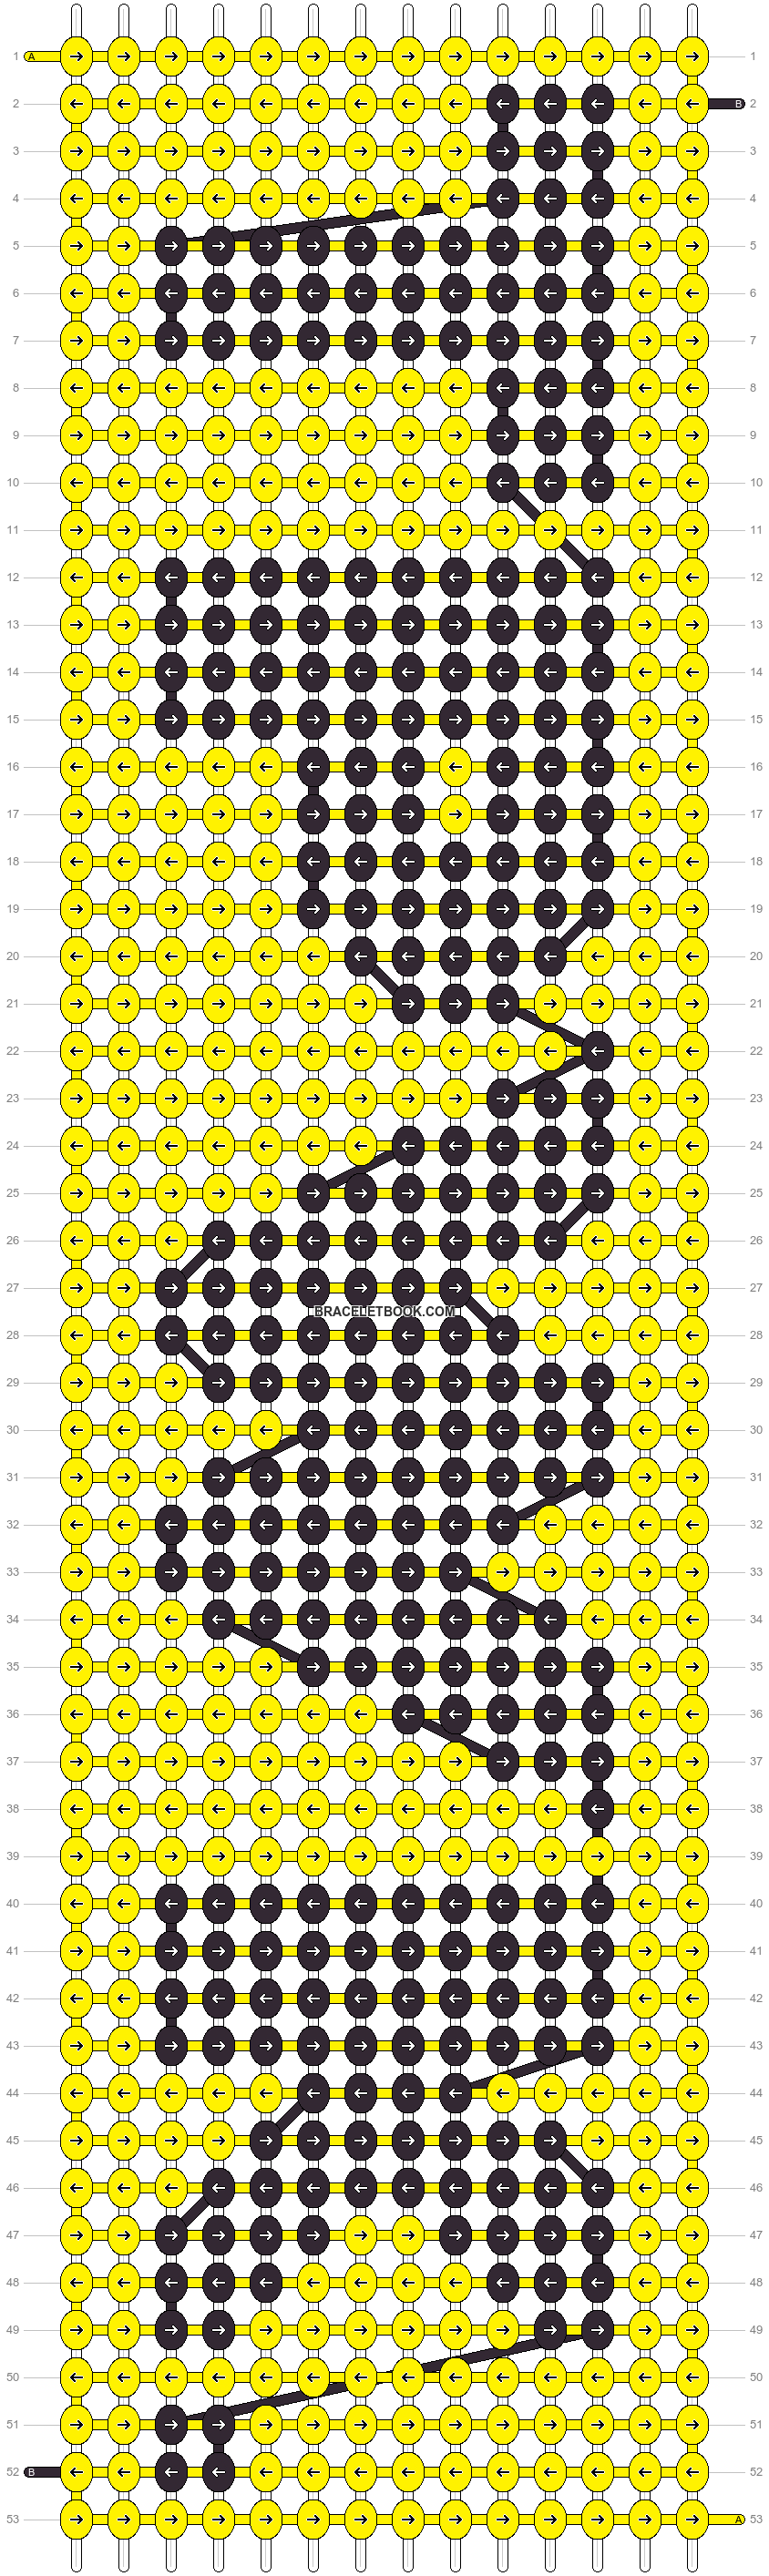 Alpha pattern #38816 variation #114872 pattern